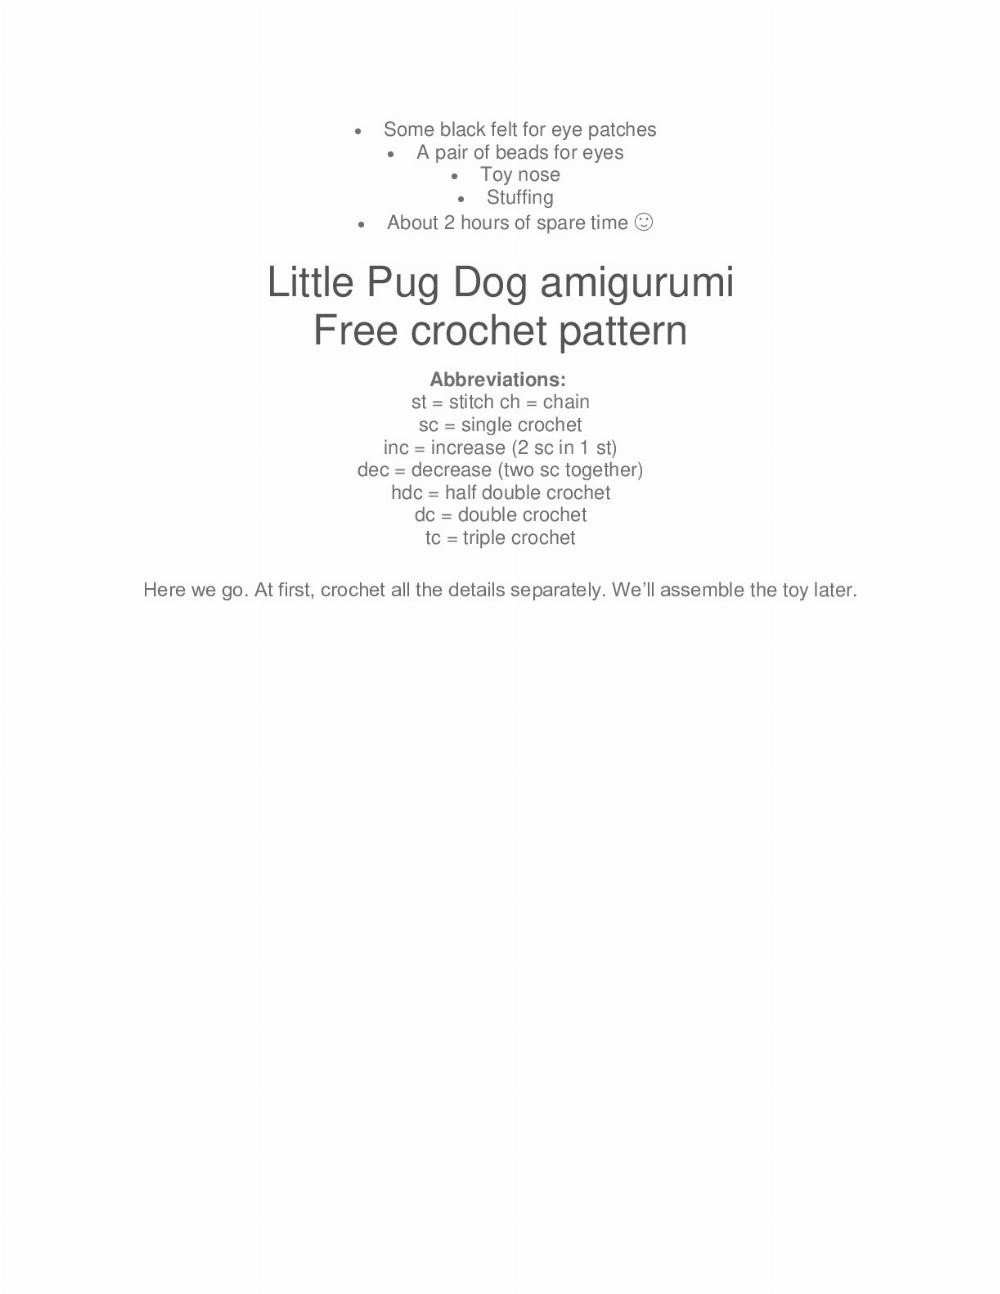 Little Pug Dog amigurumi pattern